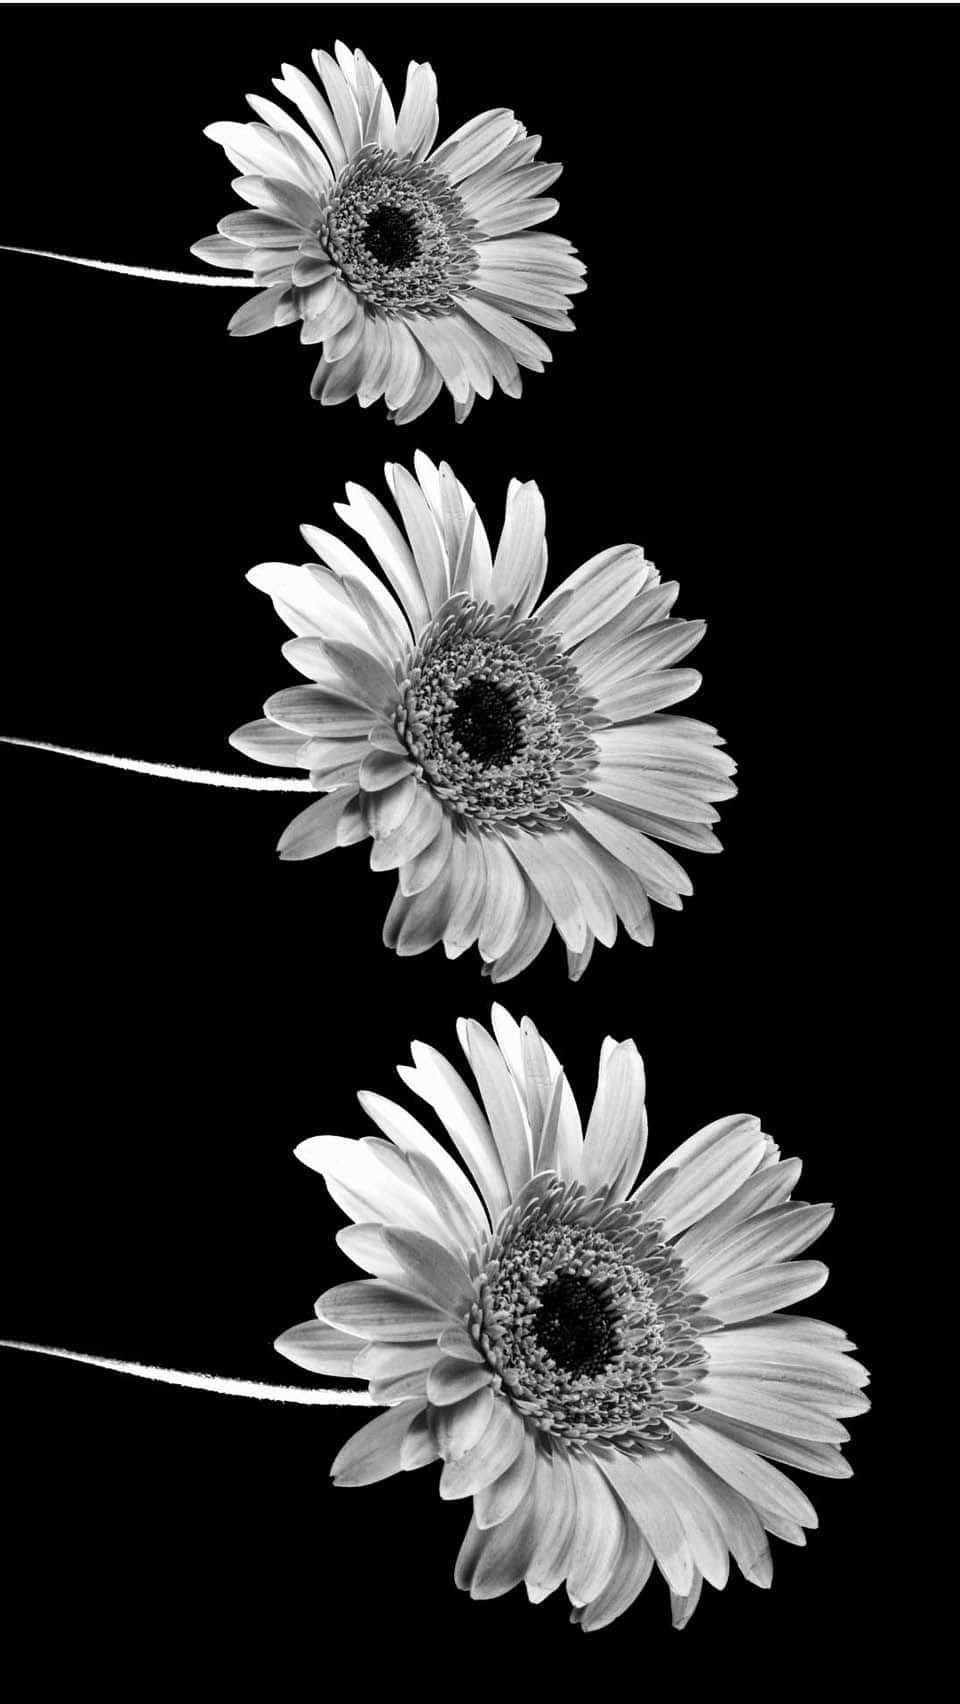 Three Black And White Aesthetic Flower Wallpaper